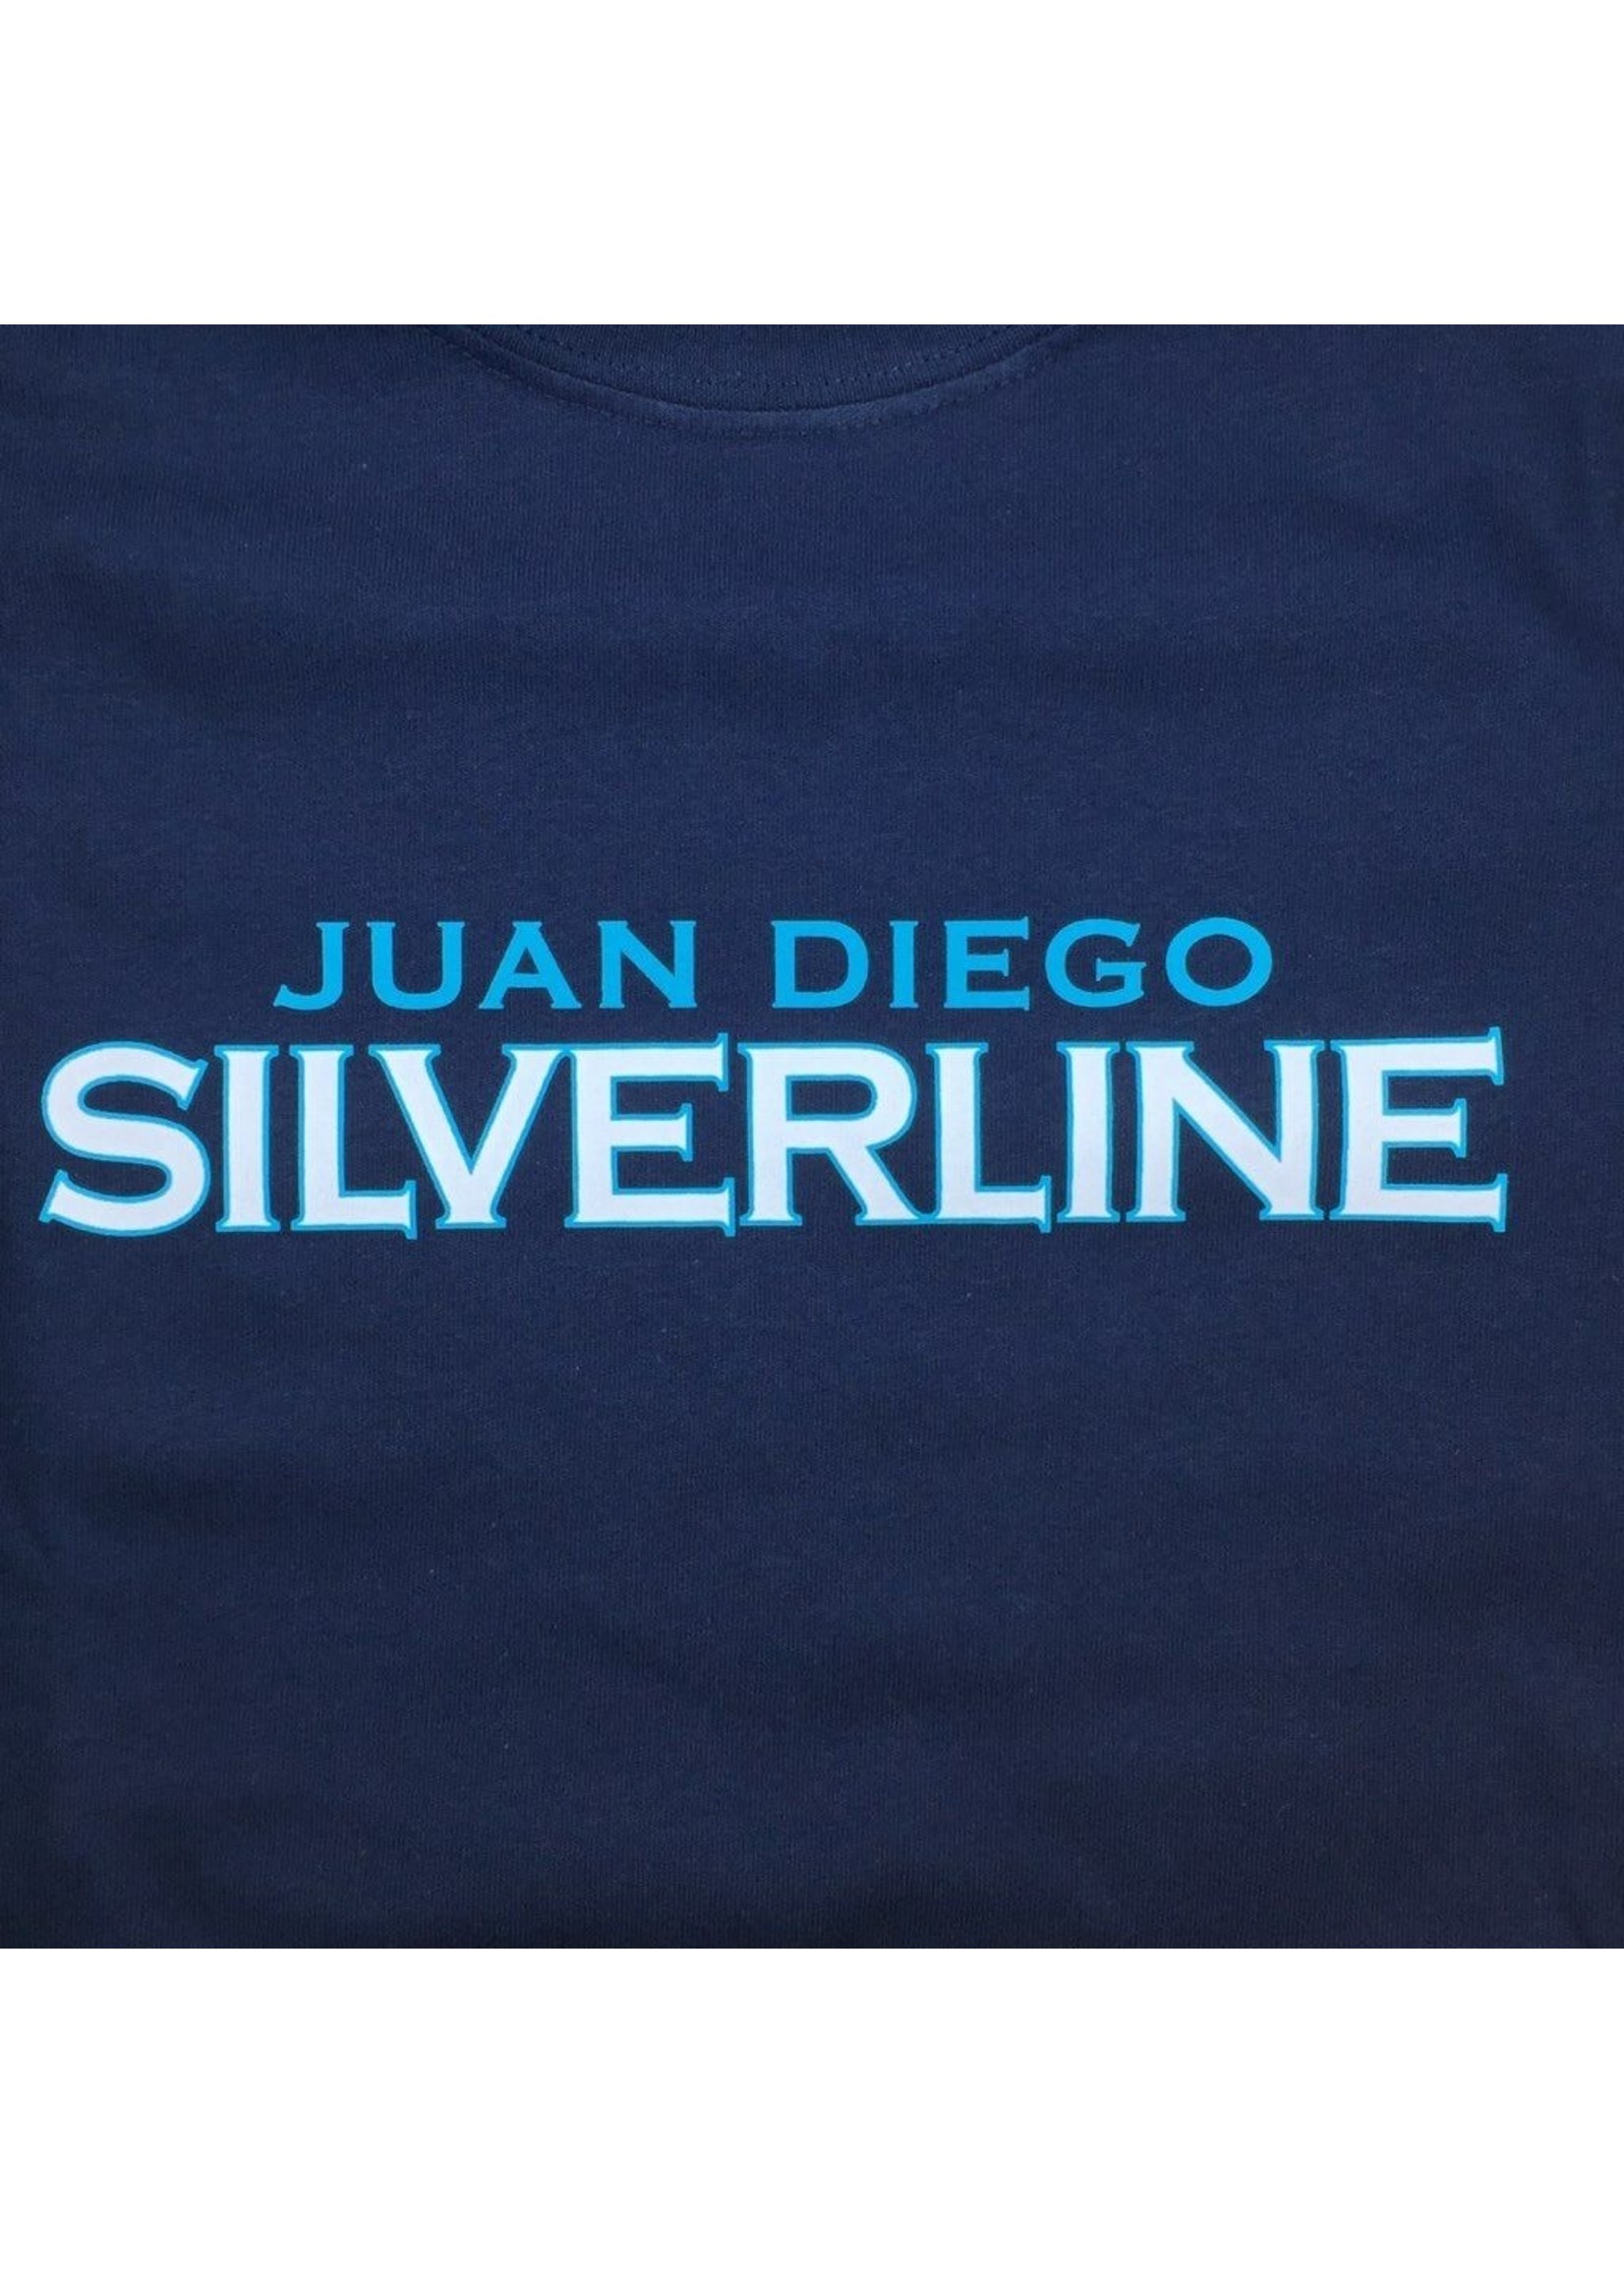 NON-UNIFORM Juan Diego Silverline Unisex s/s t-shirt